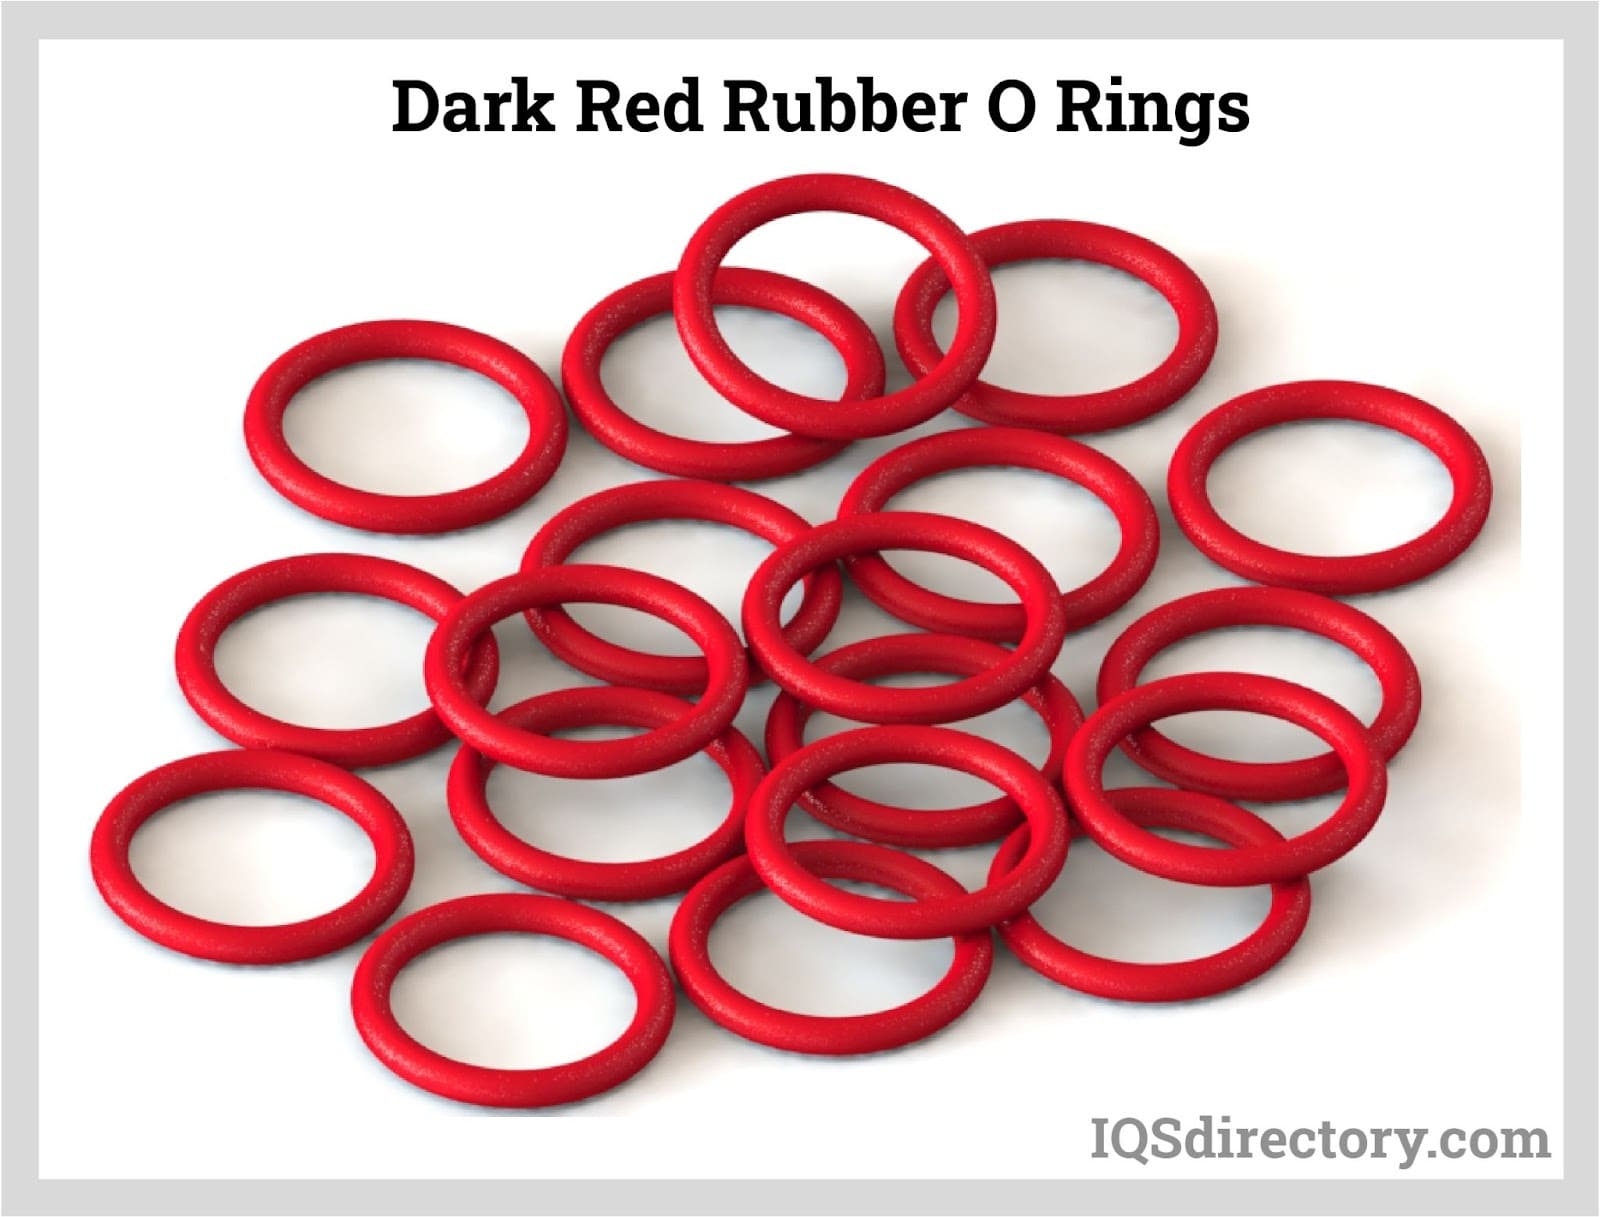 Dark Red Rubber O Rings